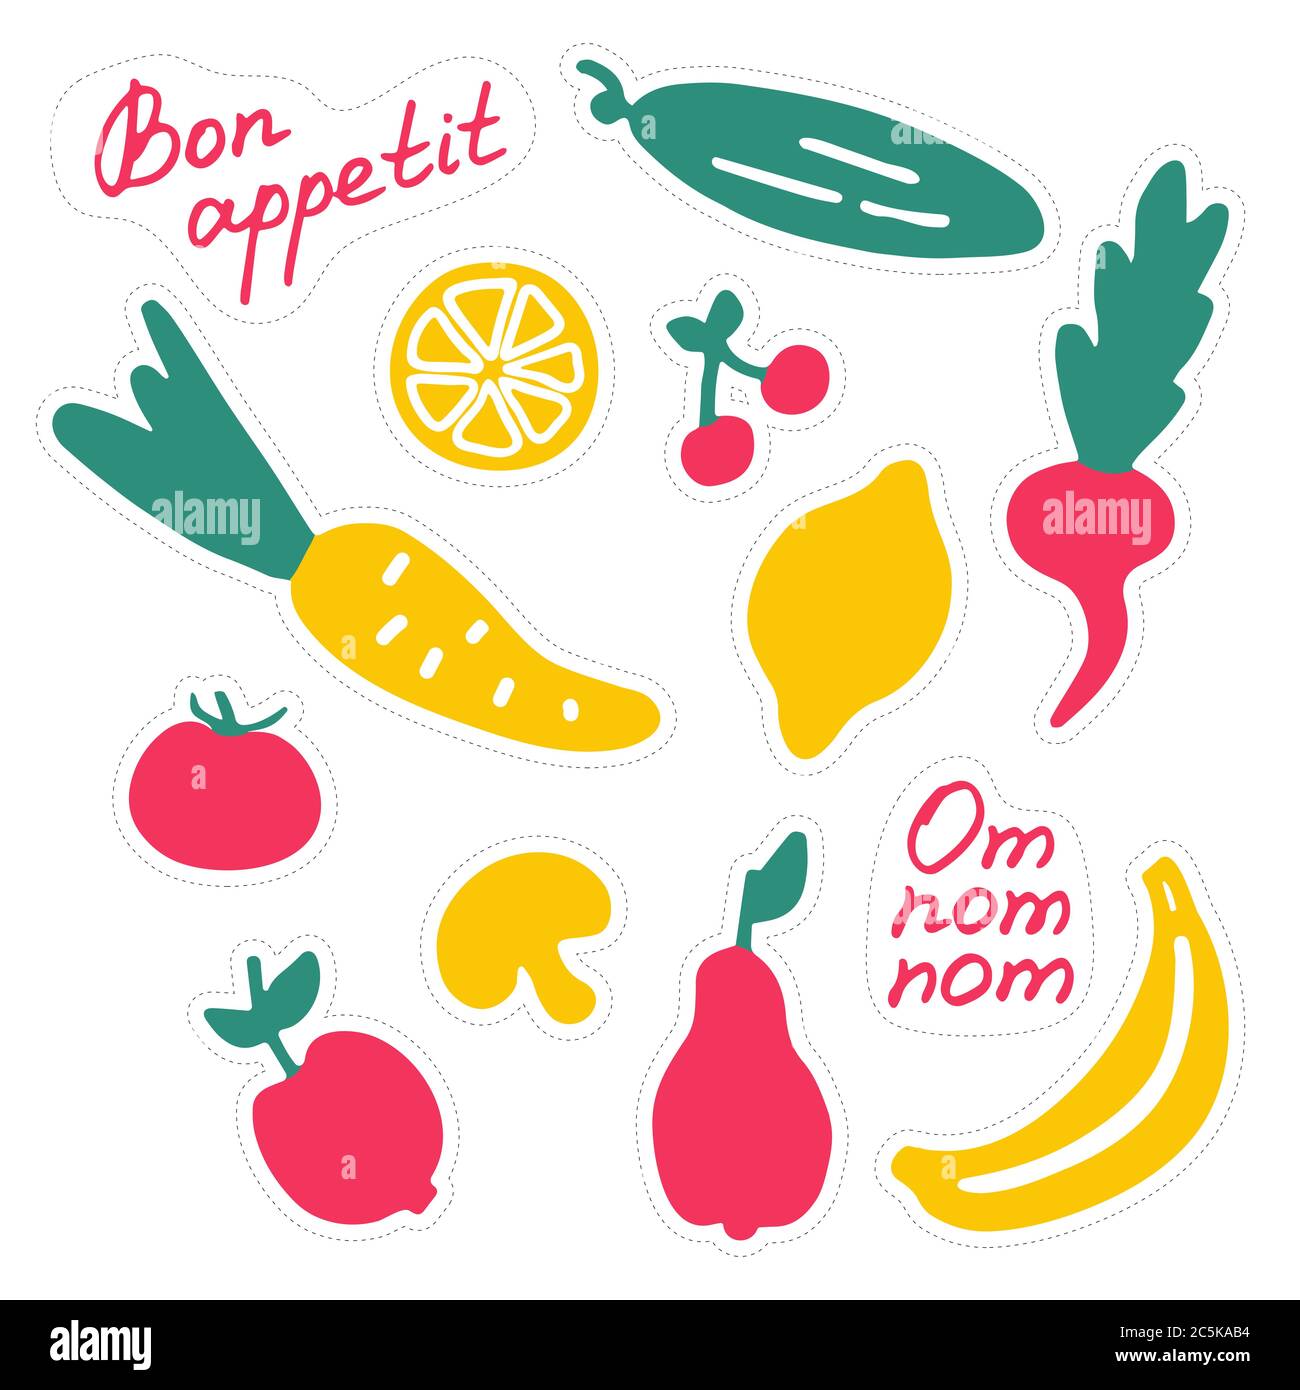 Bon Appetit' Sticker | Spreadshirt